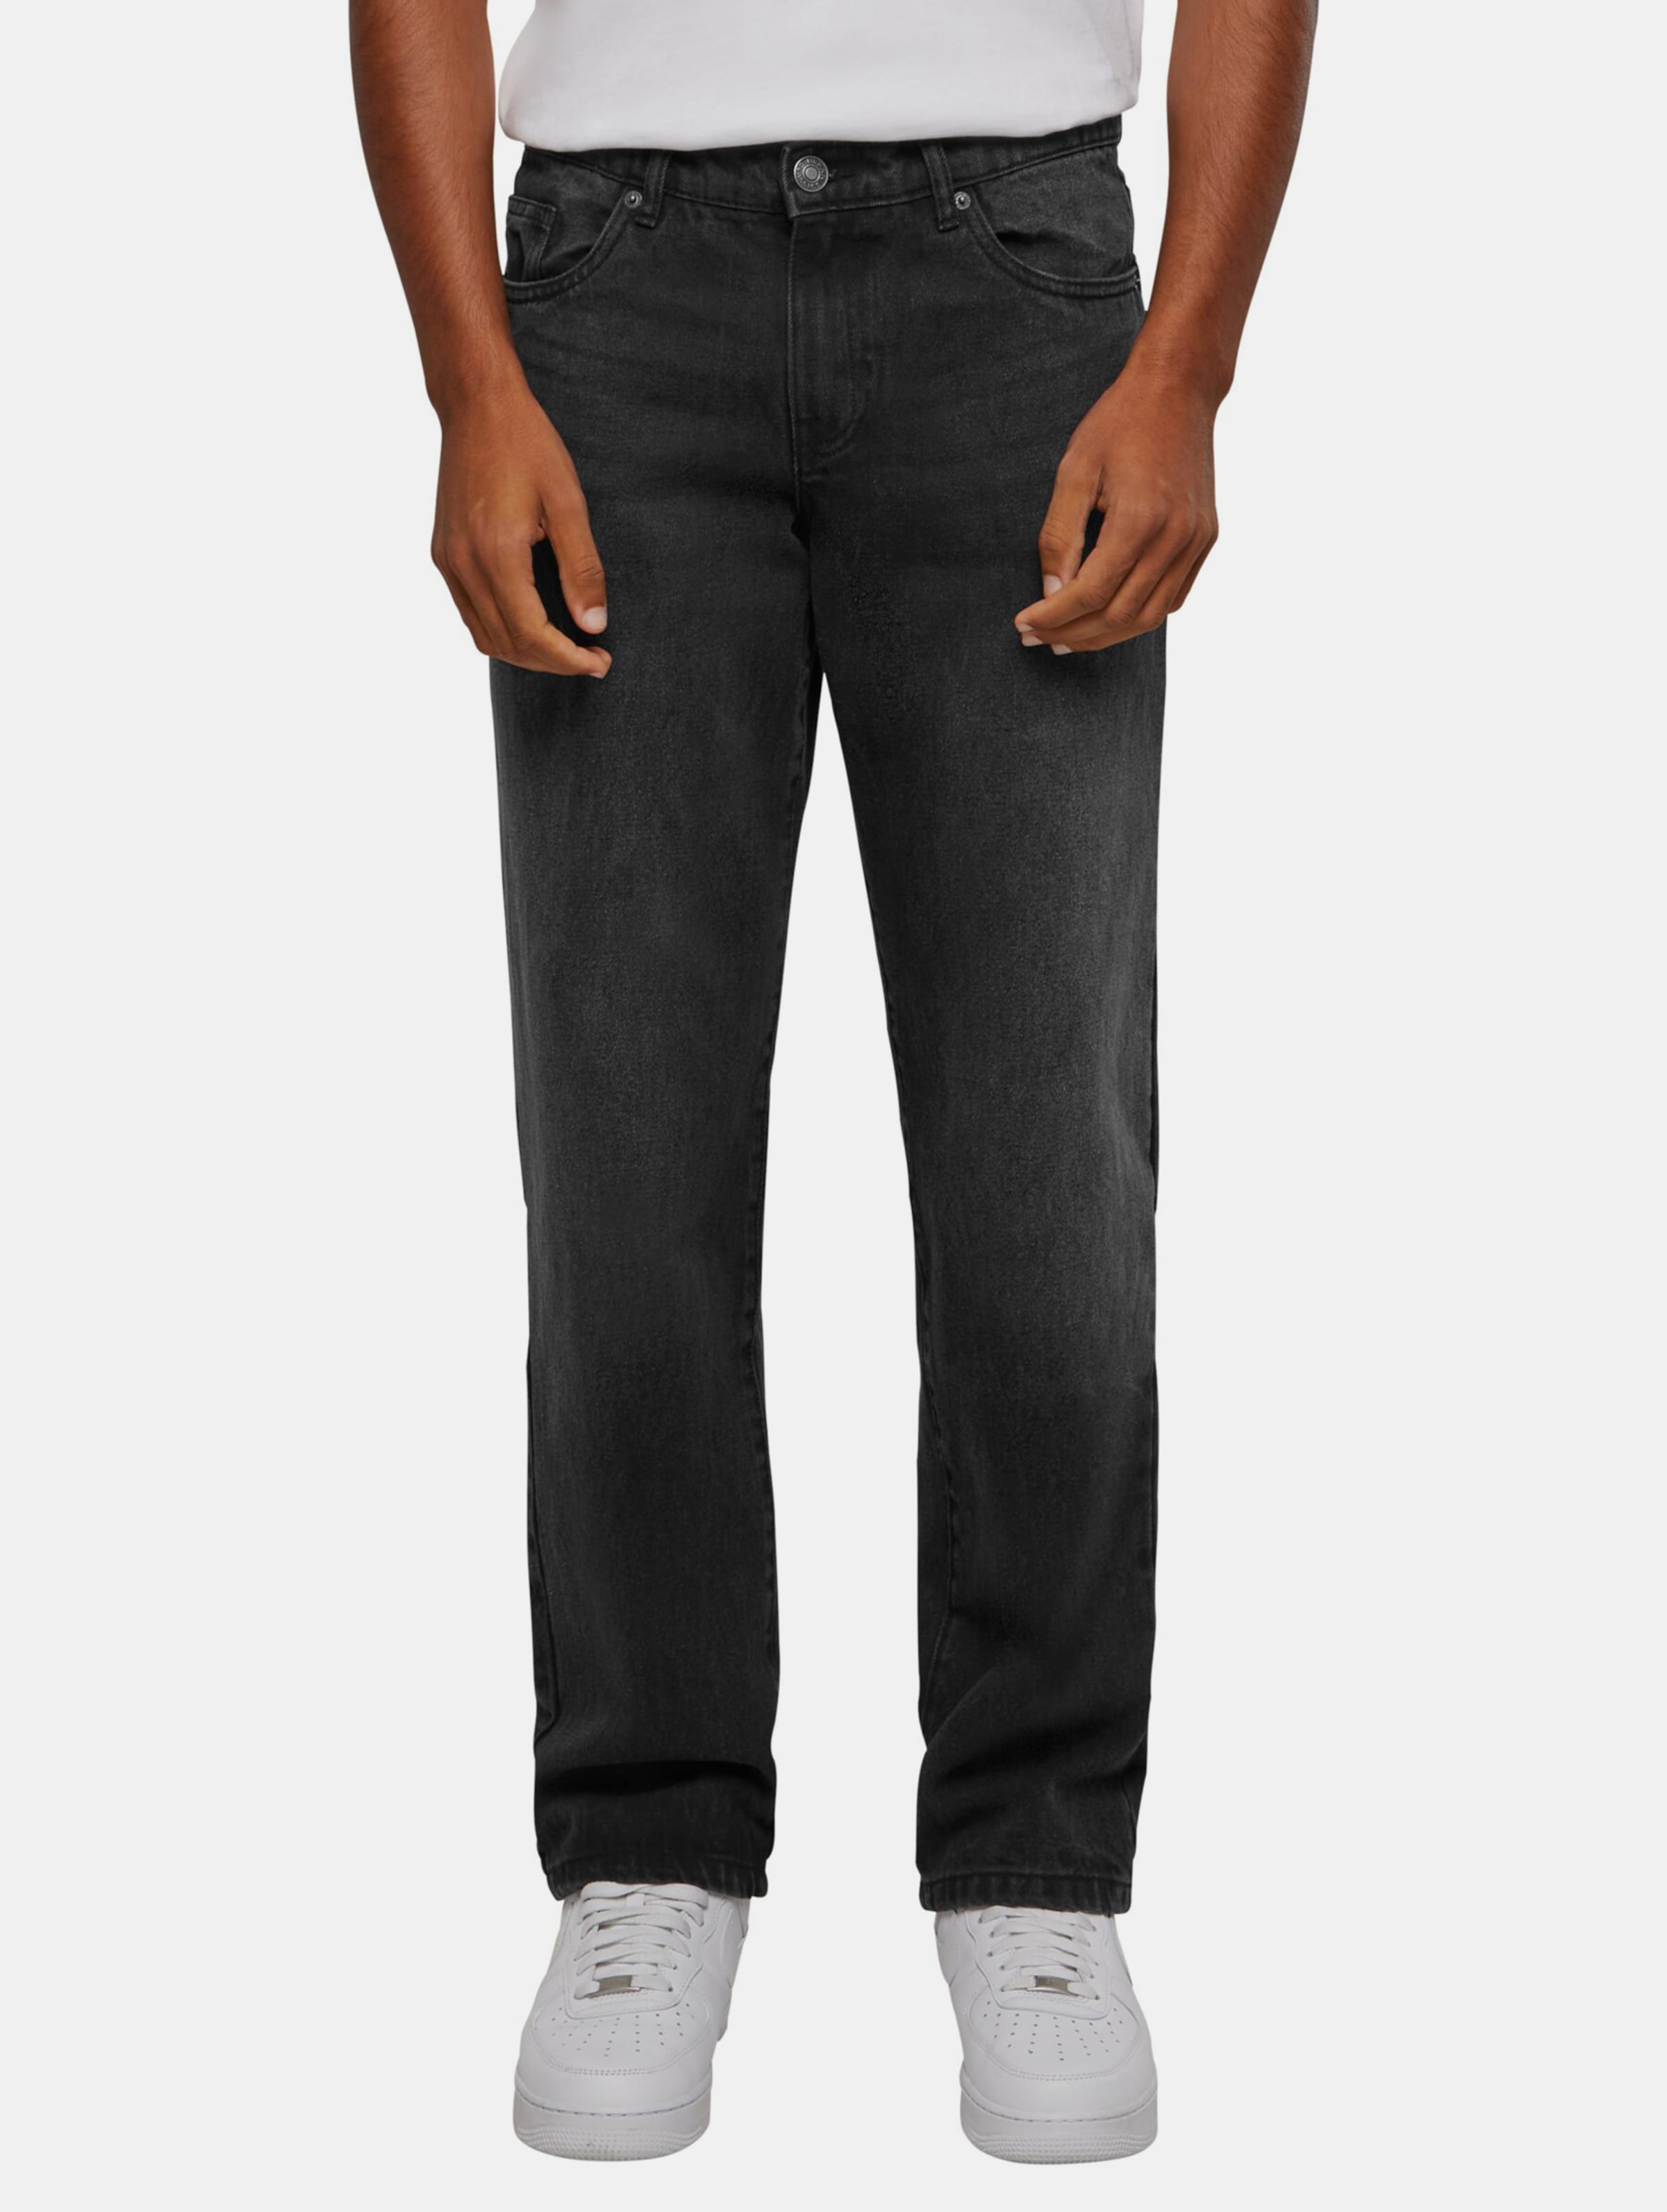 Urban Classics - Heavy Ounce Straight Fit Jeans Broek rechte pijpen - Taille, 36 inch - Zwart